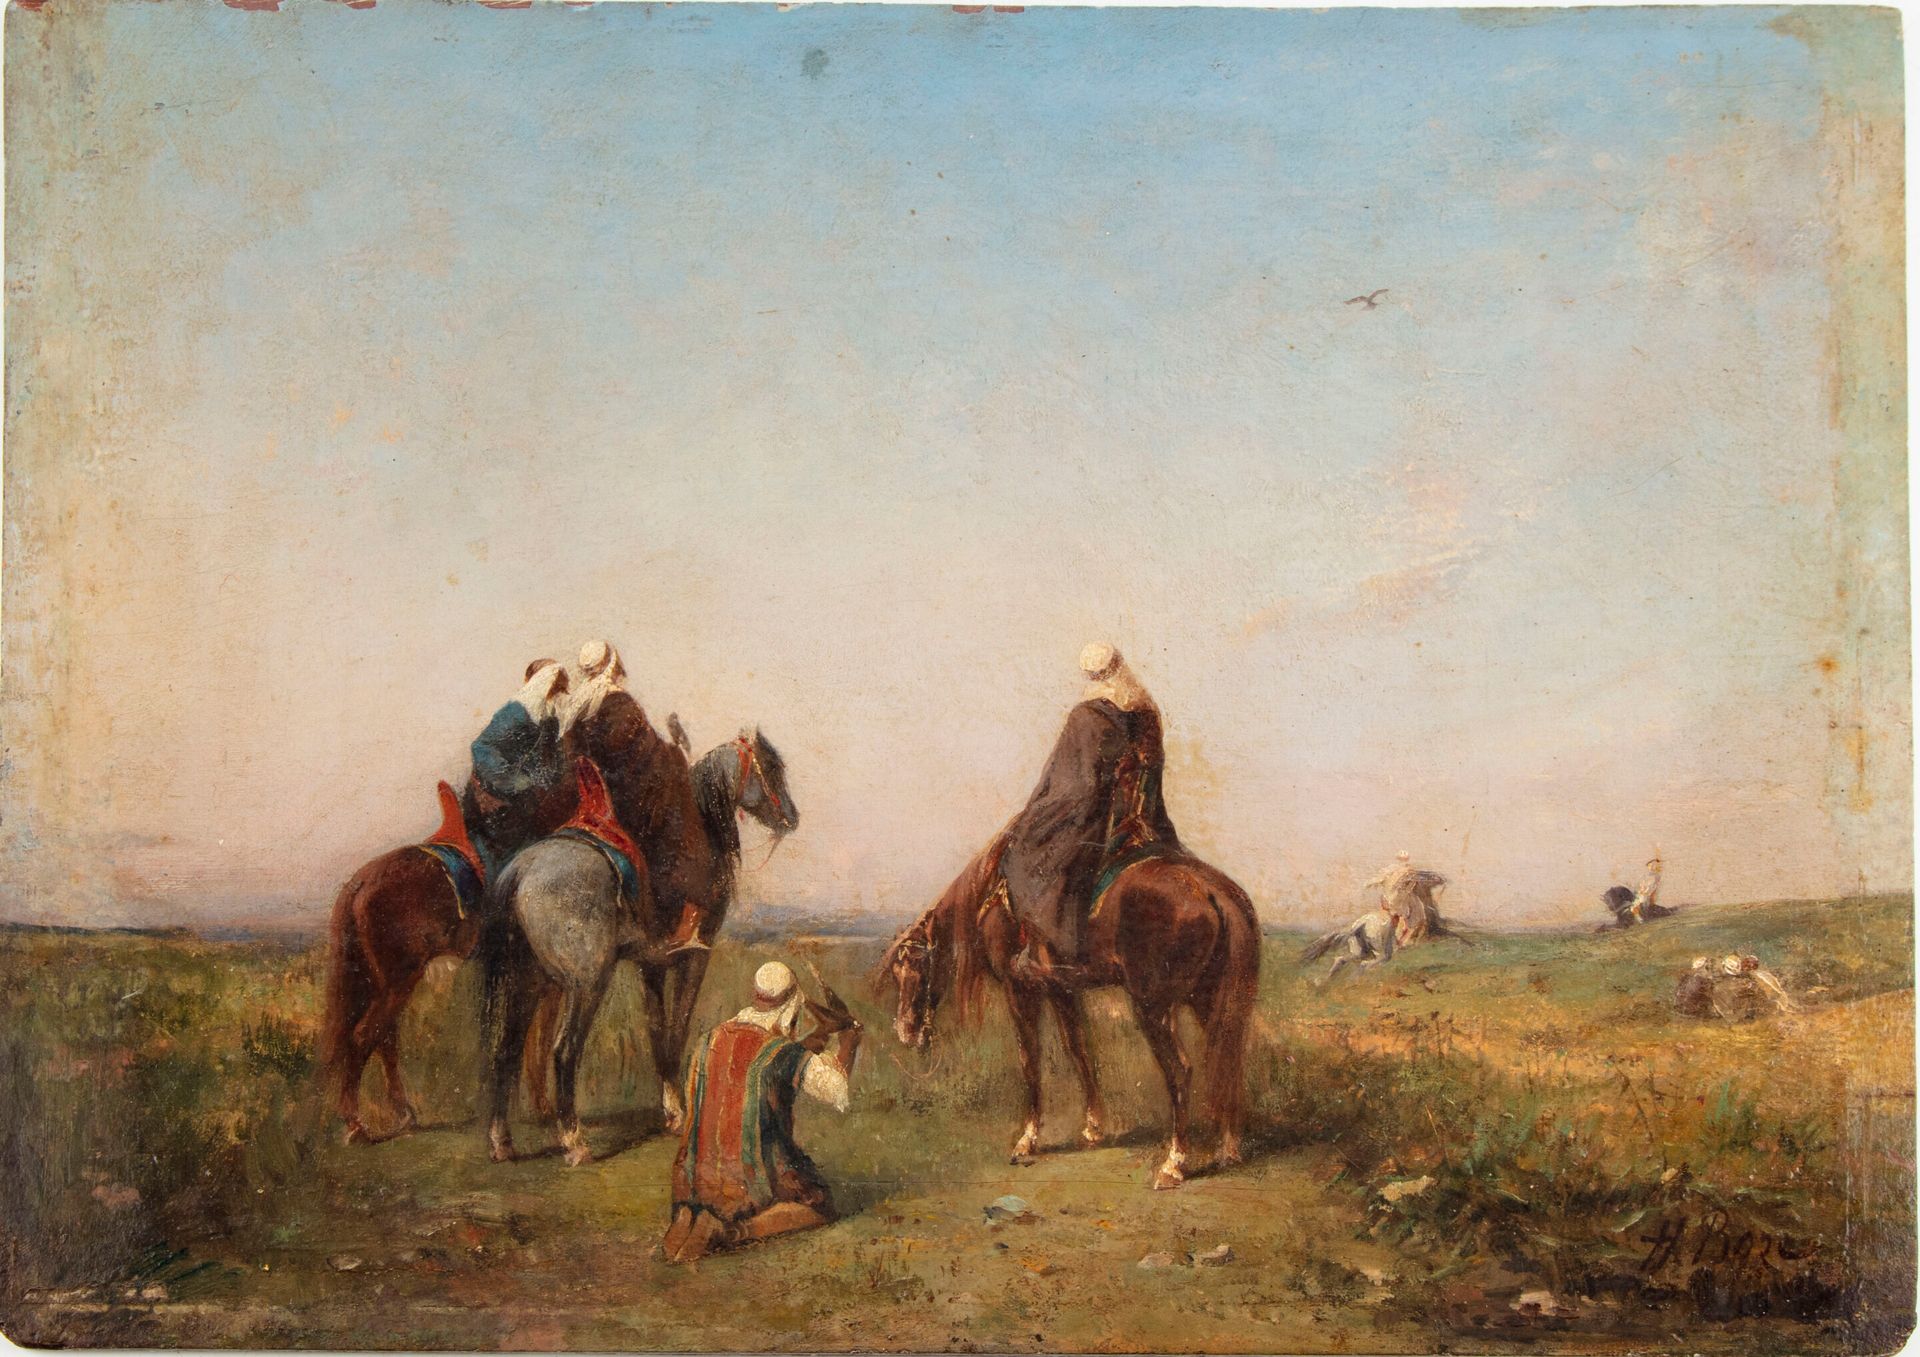 BOZE 奥诺雷-布泽 (1830-1908)

阿拉伯骑手

板面油画，右下角有签名

30 x 41,5 cm

无框架